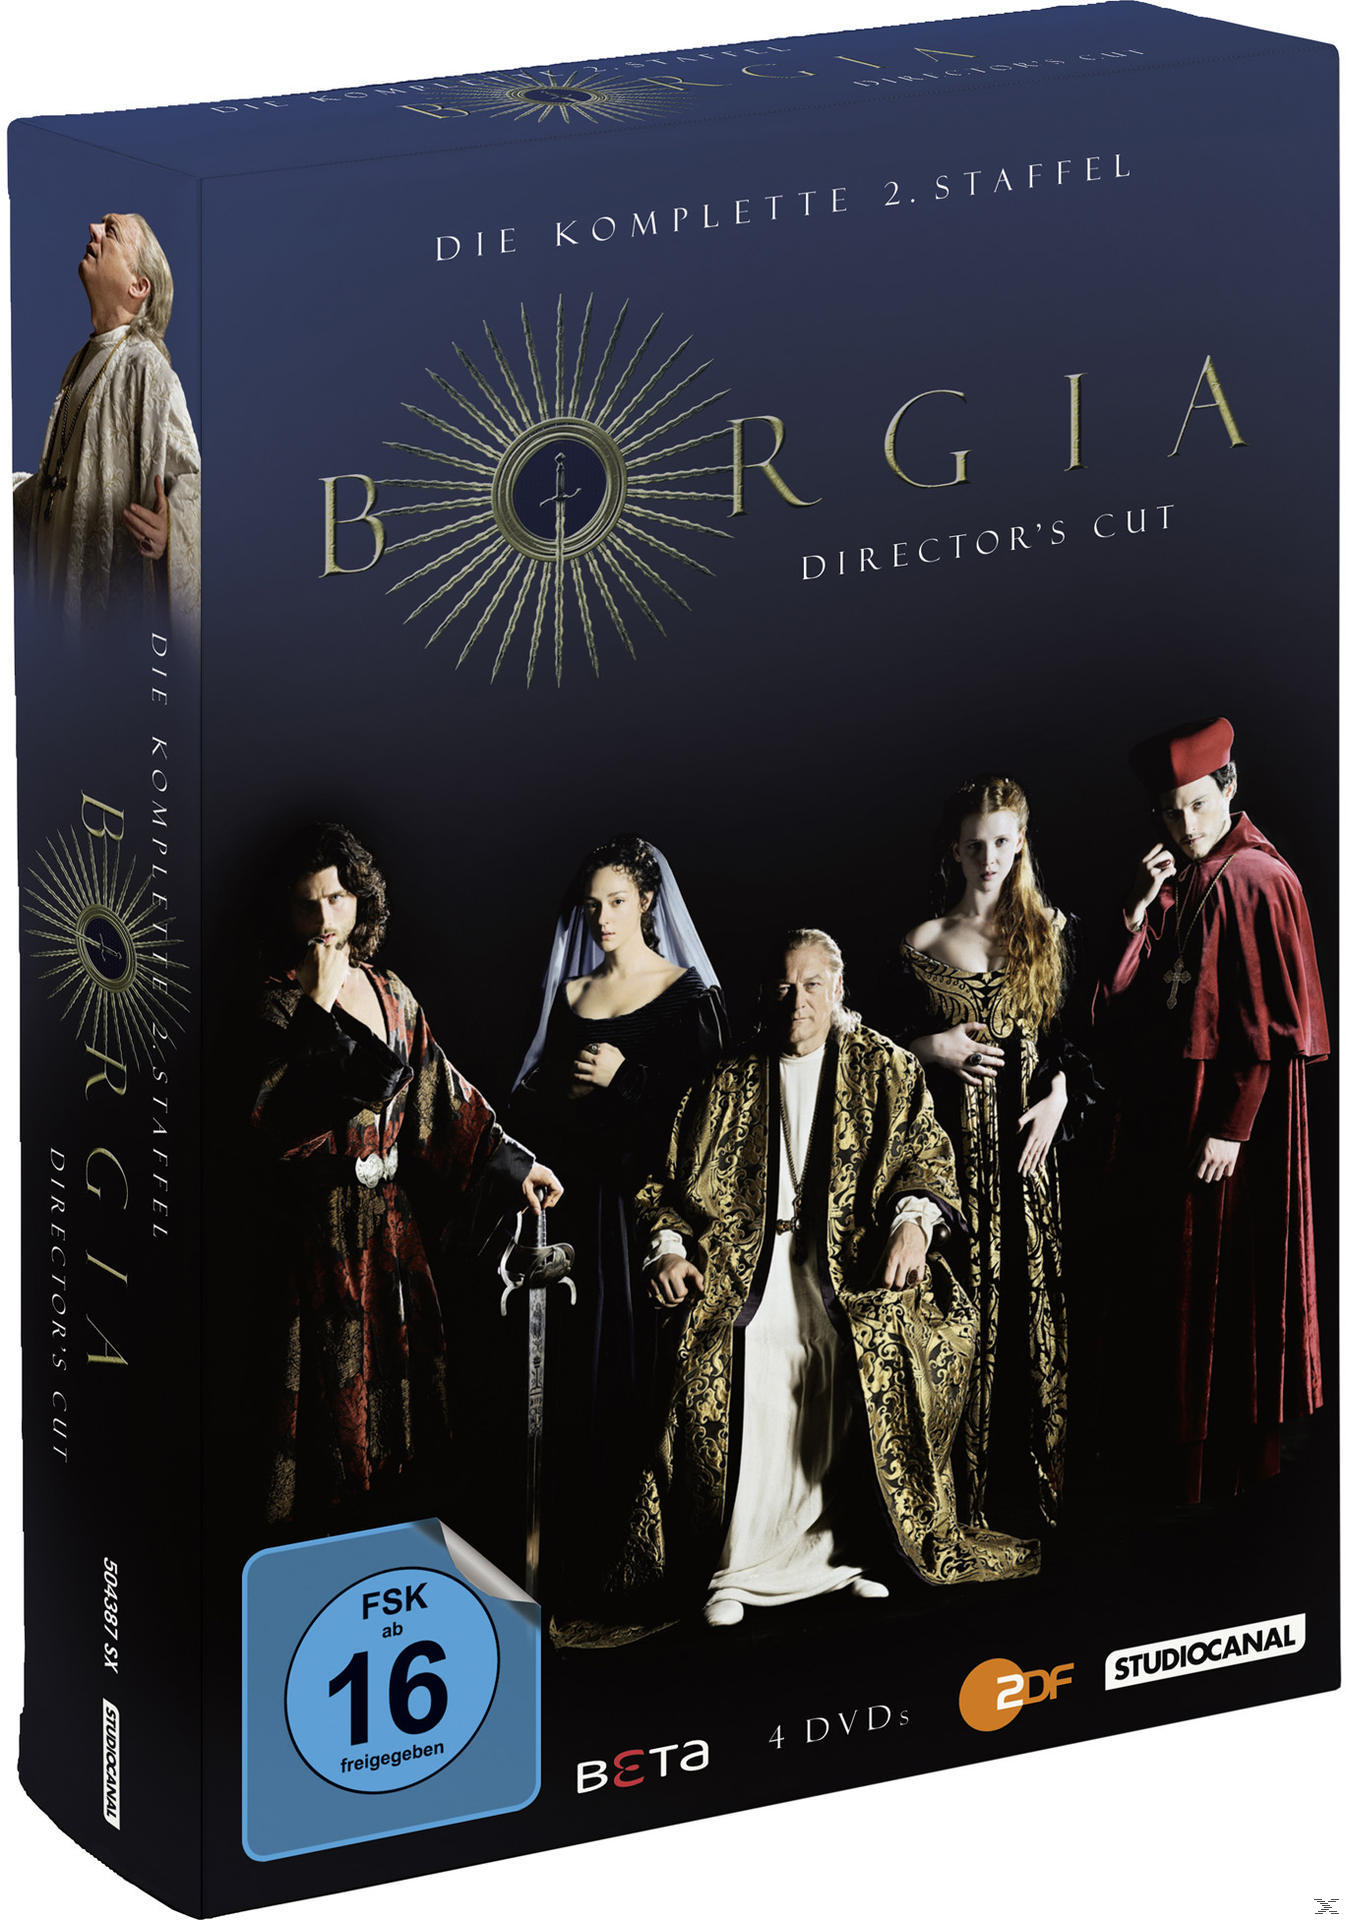 2 (Director’s DVD Borgia - Cut) Staffel